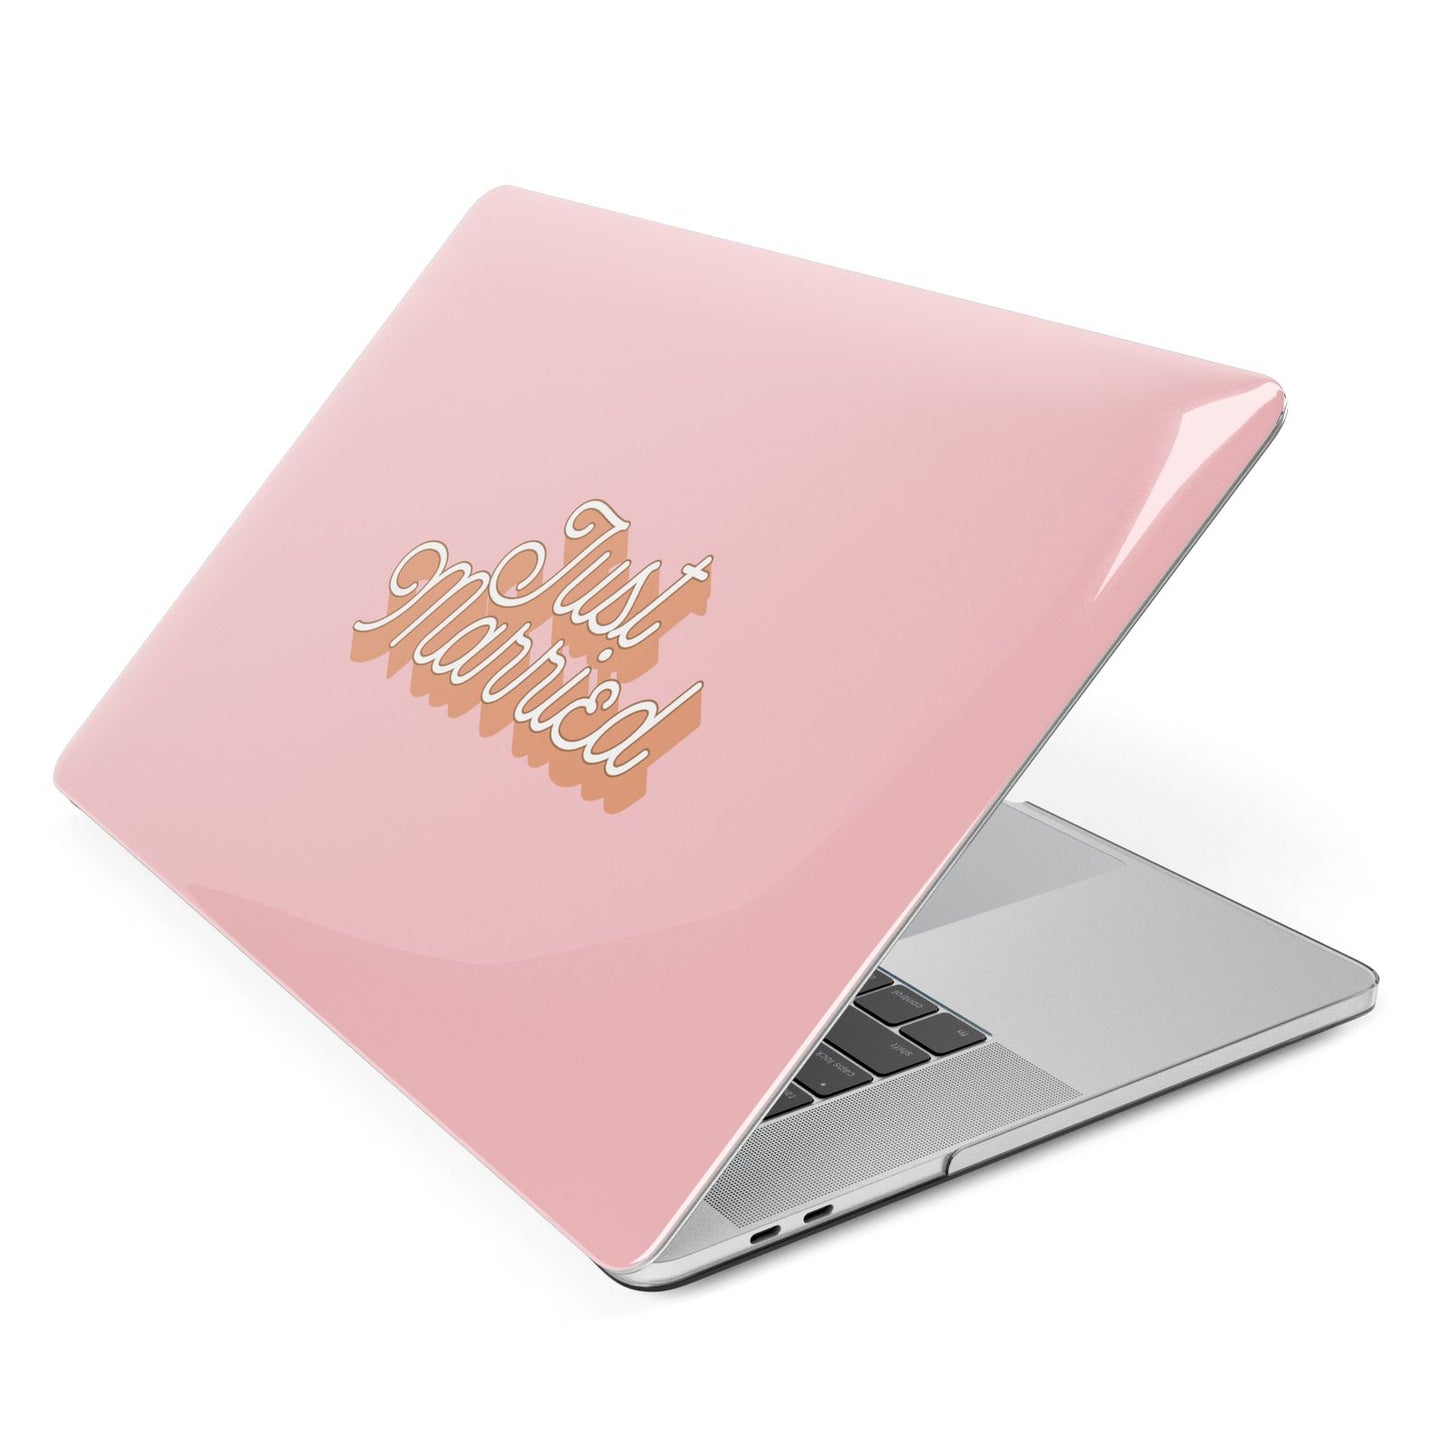 Just Married Pink Apple MacBook Case Side View